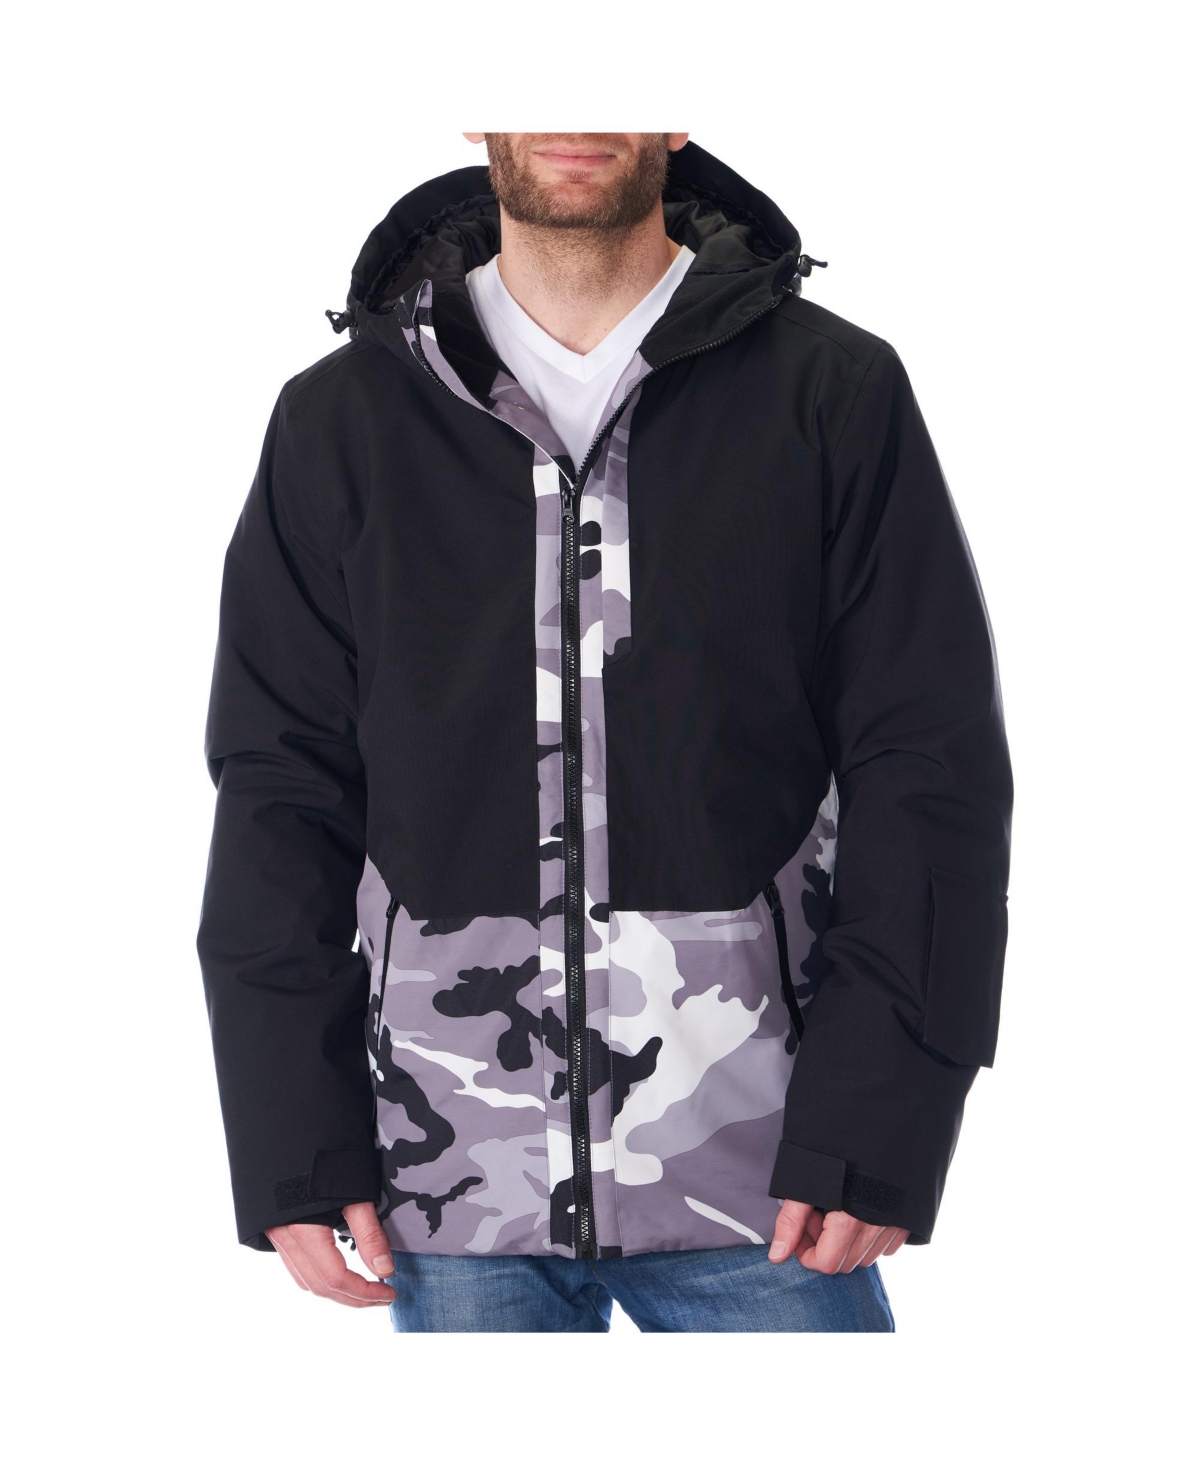 Mens Waterproof Ski Jacket Snowboarding Winter Snow Coat Raincoat - Black charcoal